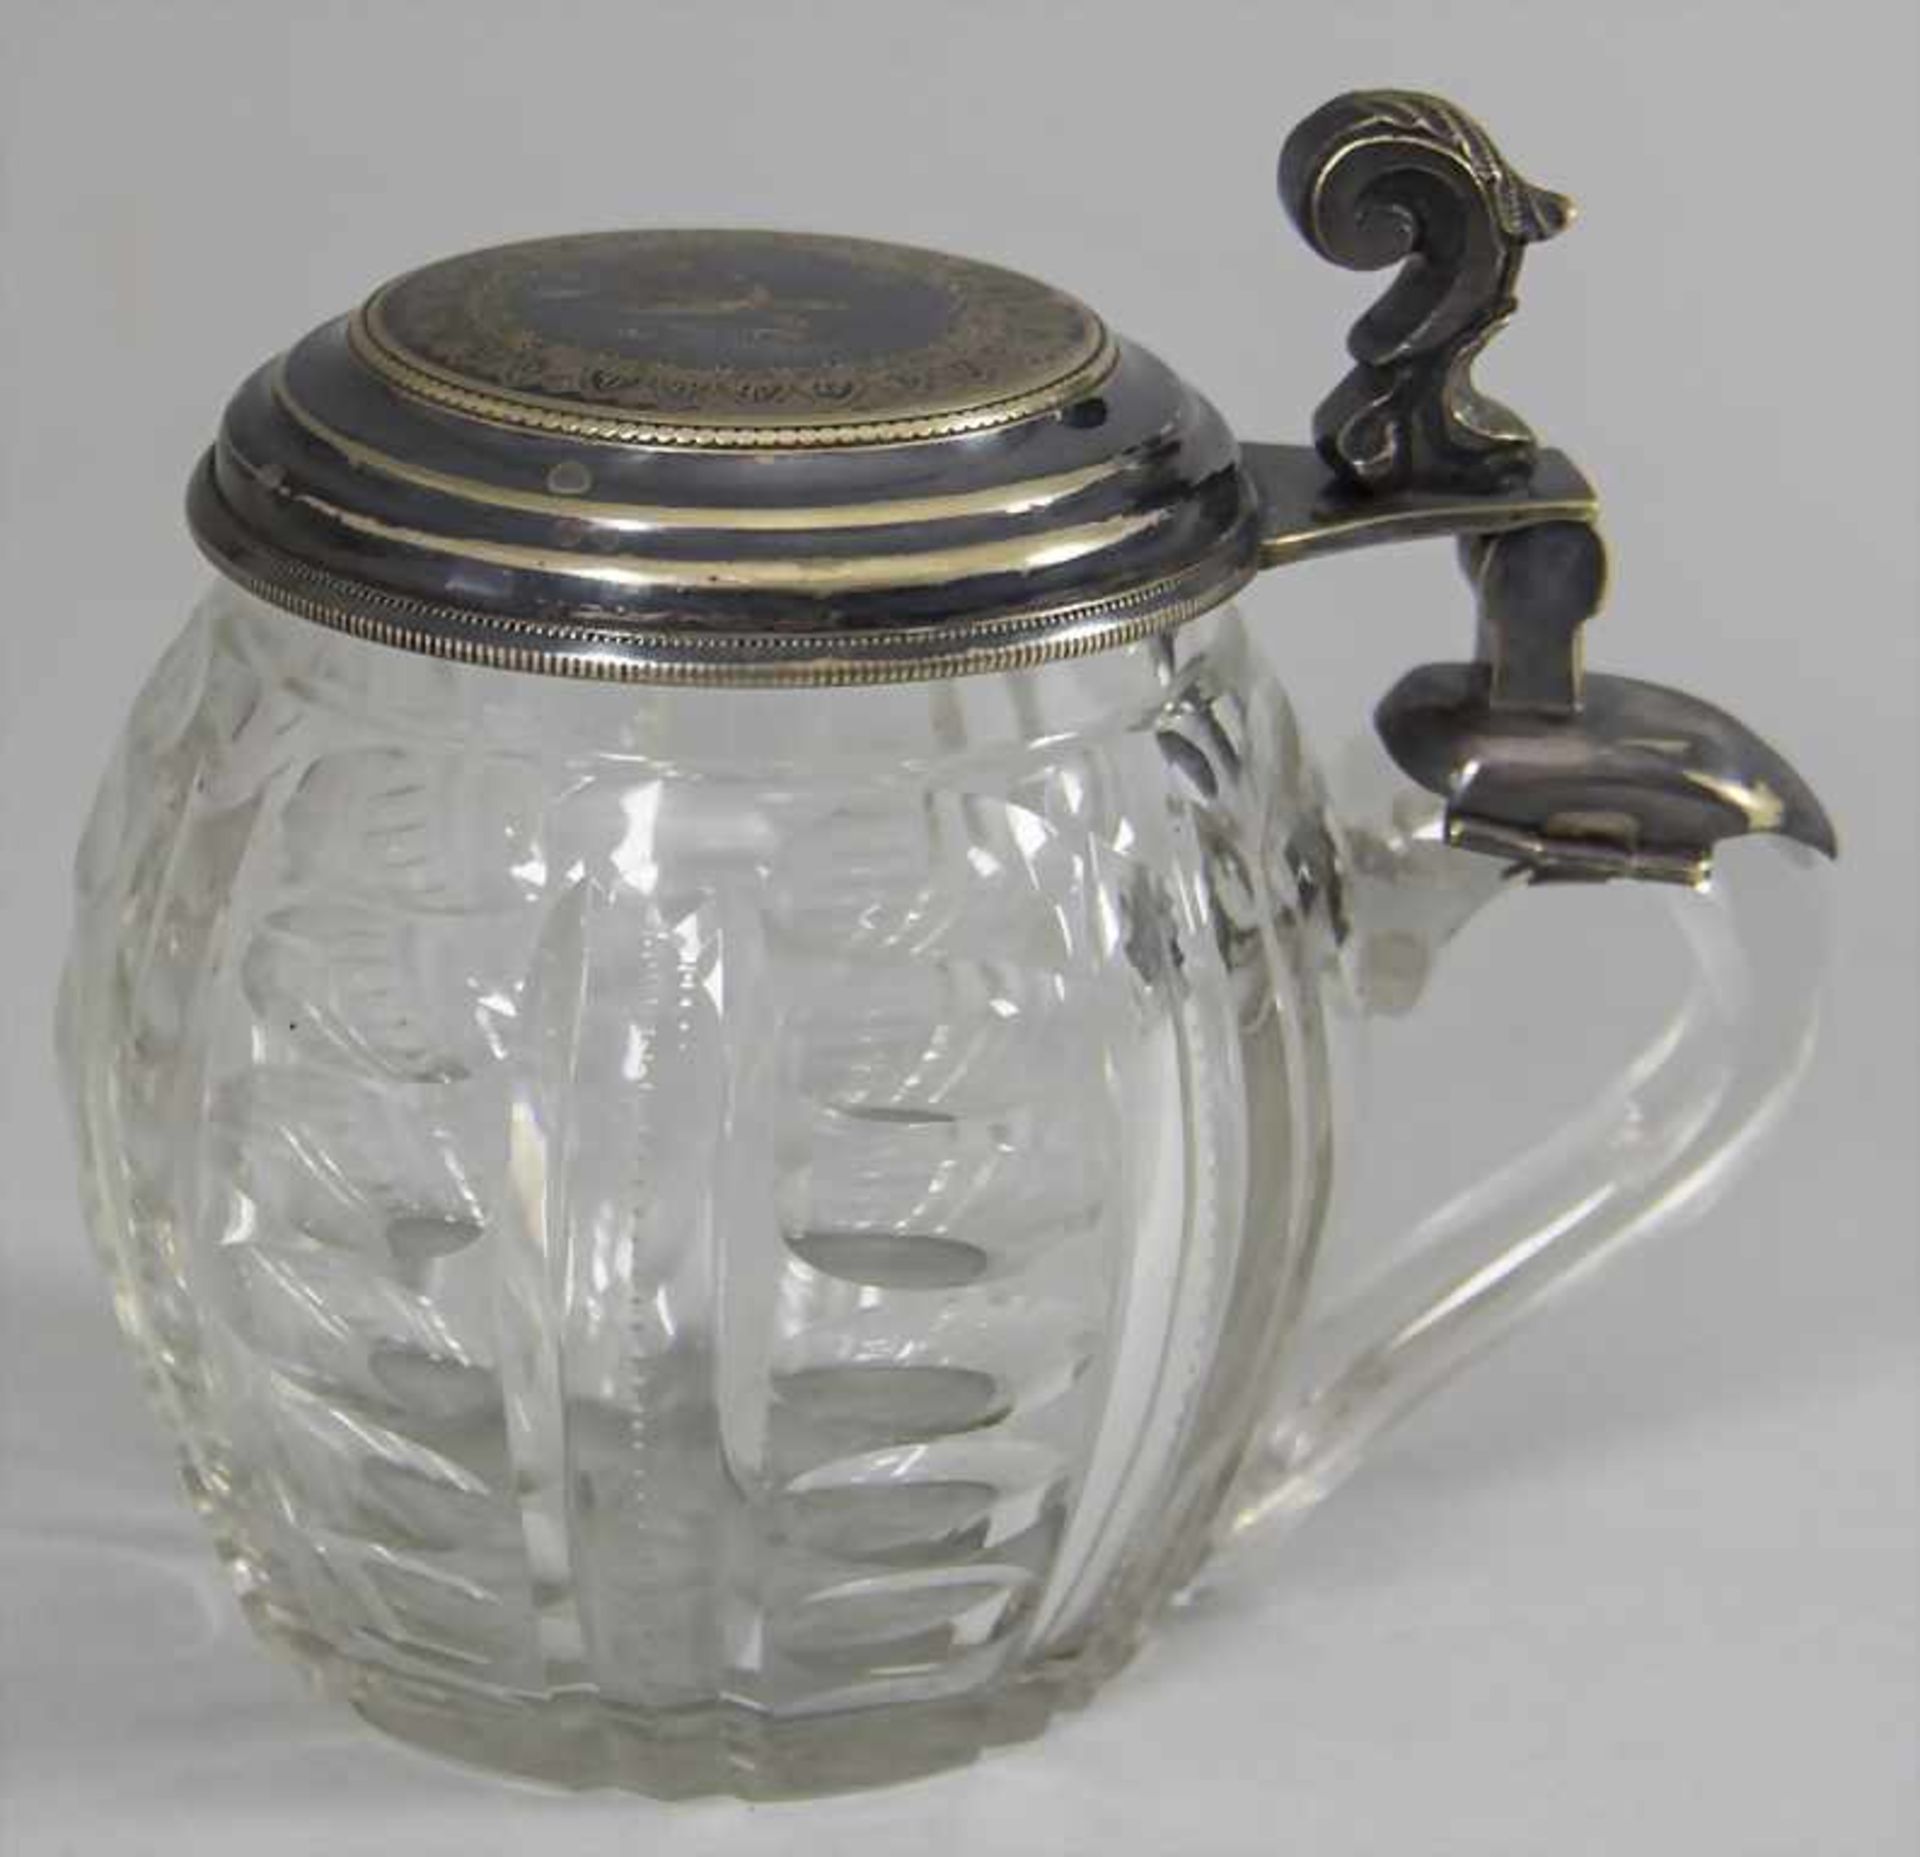 Bierkrug / A glass beer mug with plated lid